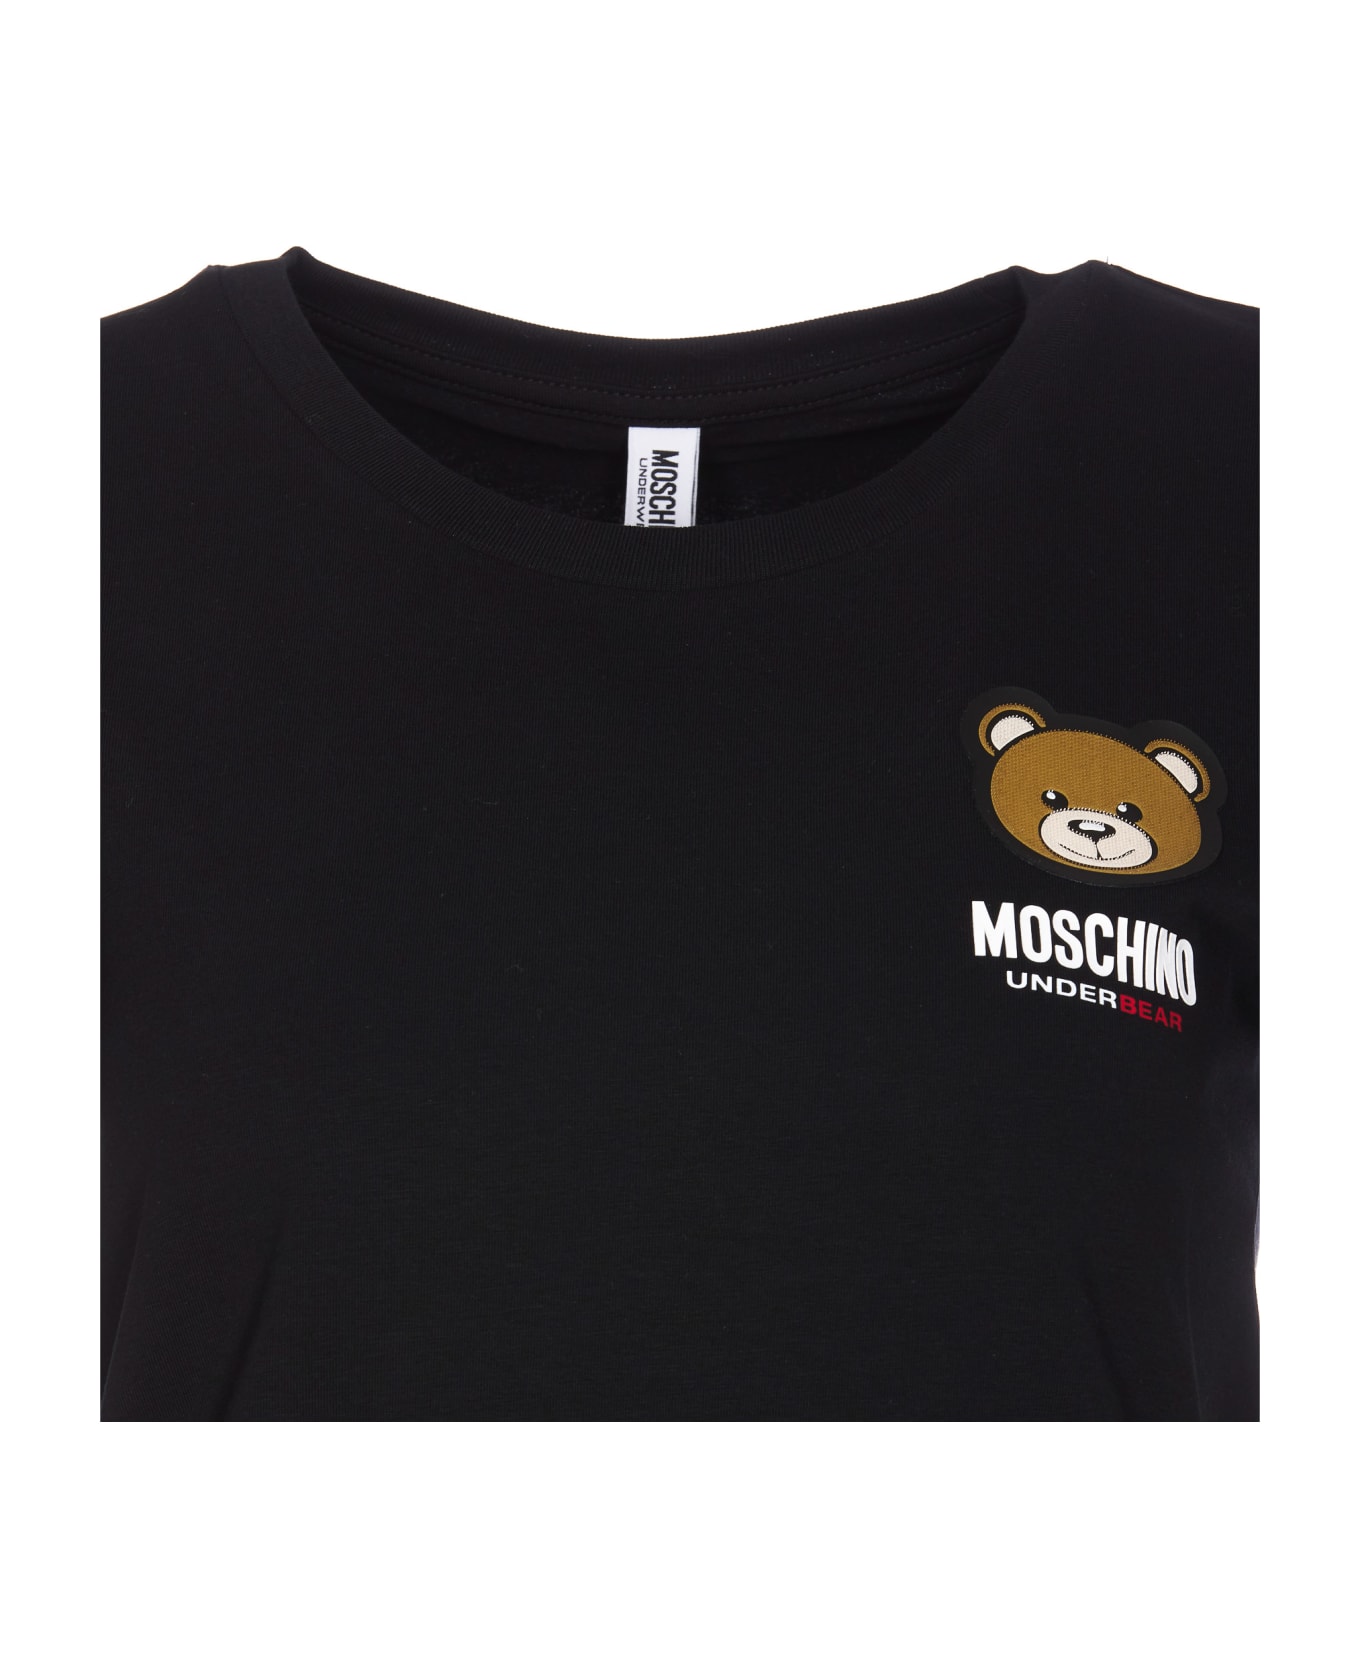 Moschino Underbear Logo T-shirt - Black Tシャツ